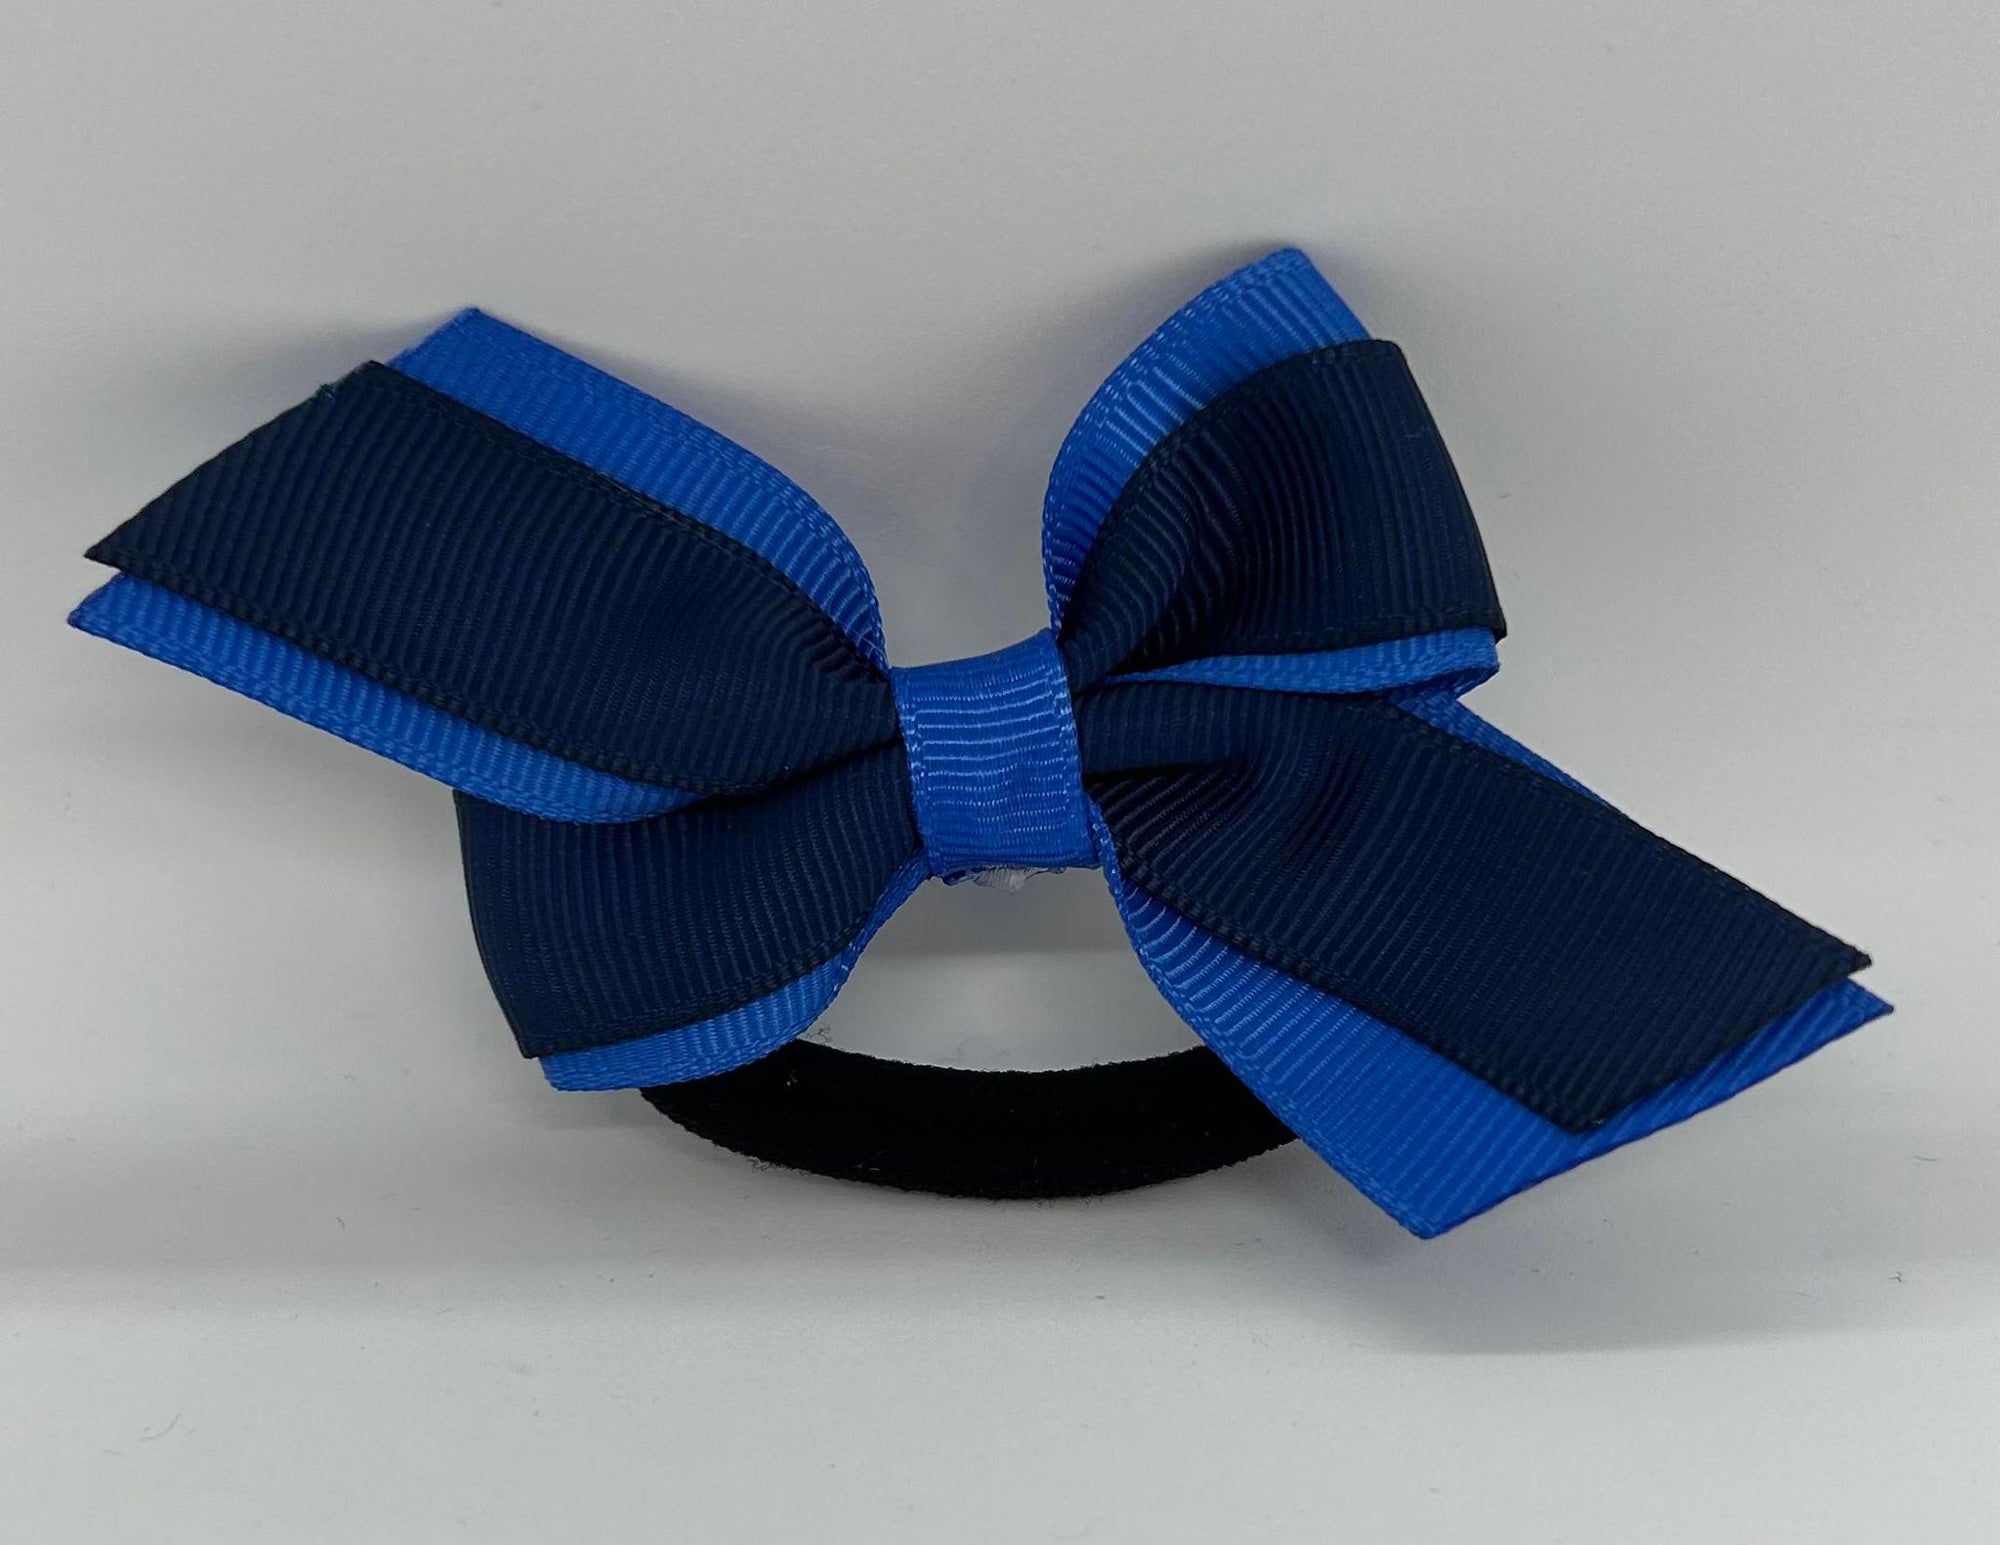 a navy and blue hair bow on a hair tie